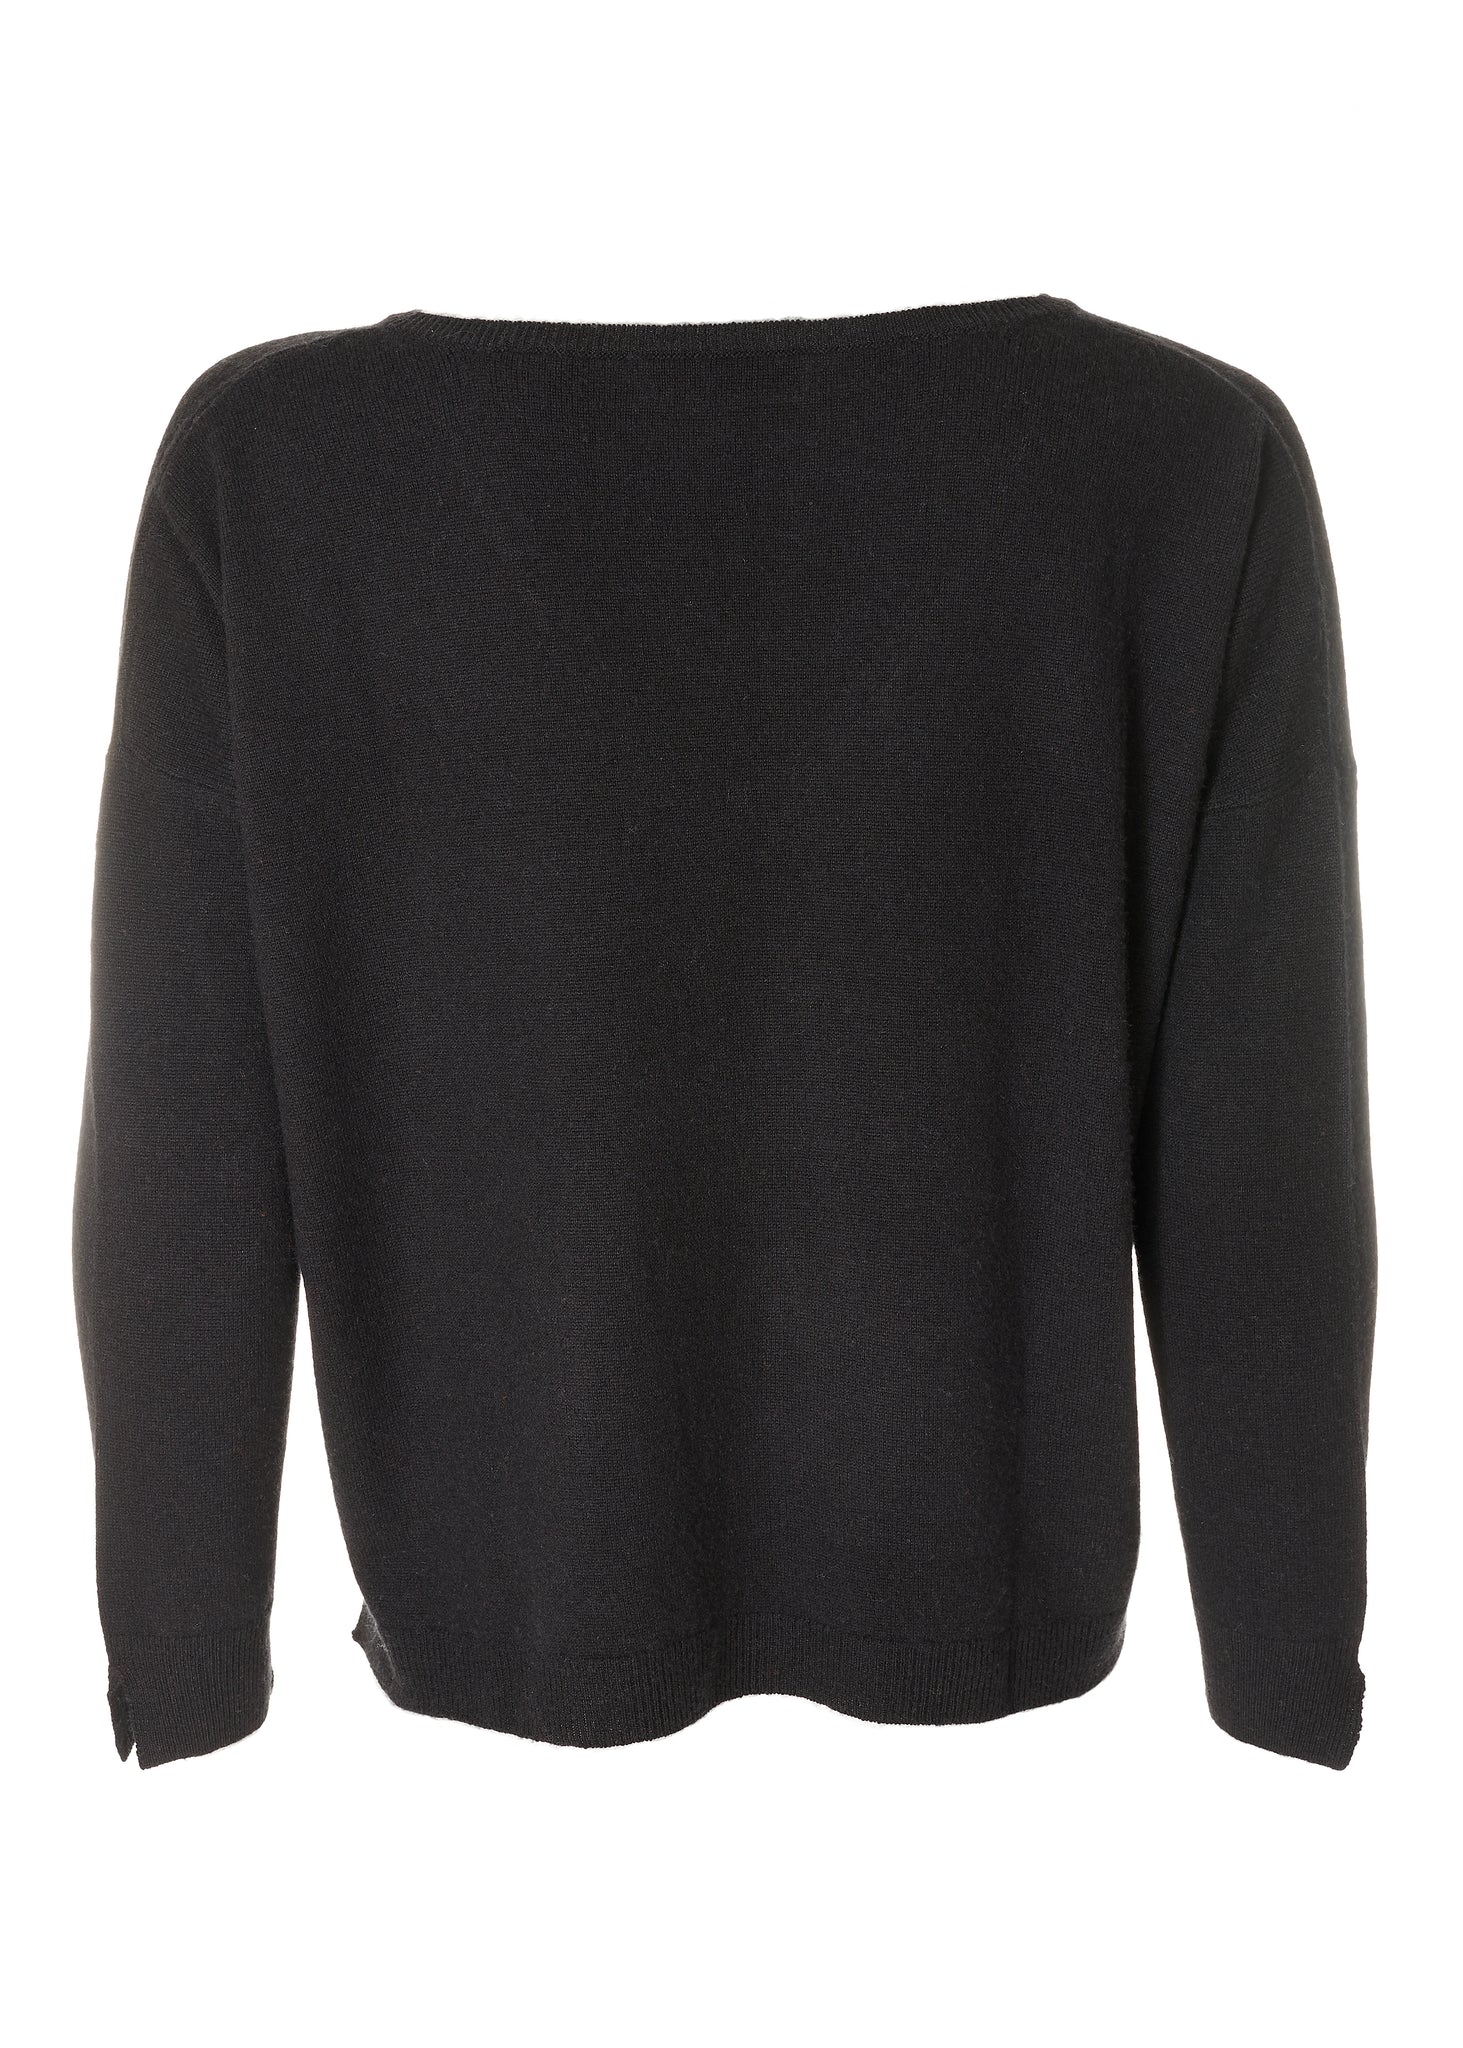 Short Blank Cashmere V Neck Sweater - Jessimara